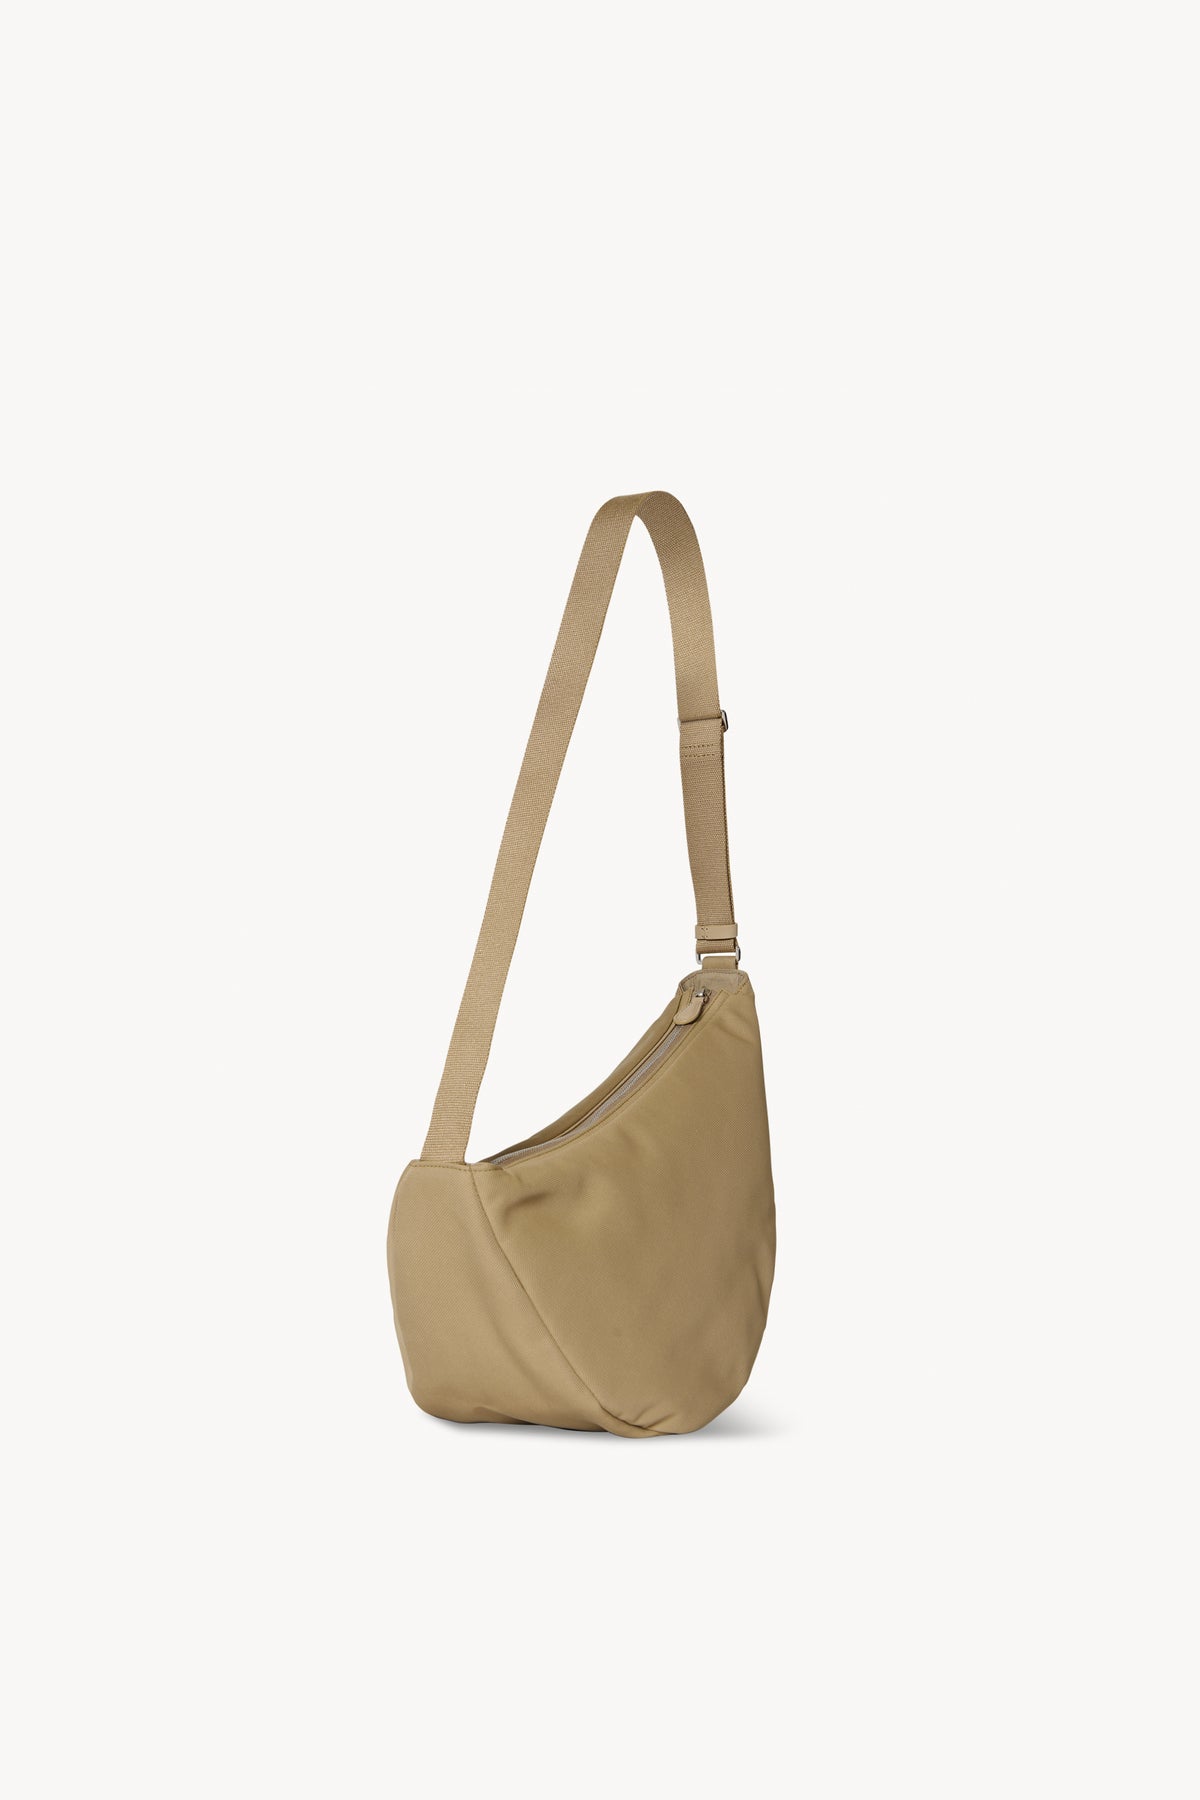 Banana Republic Tote Handbag Italian Leather Convertible Crossbody Bag Purse  | eBay